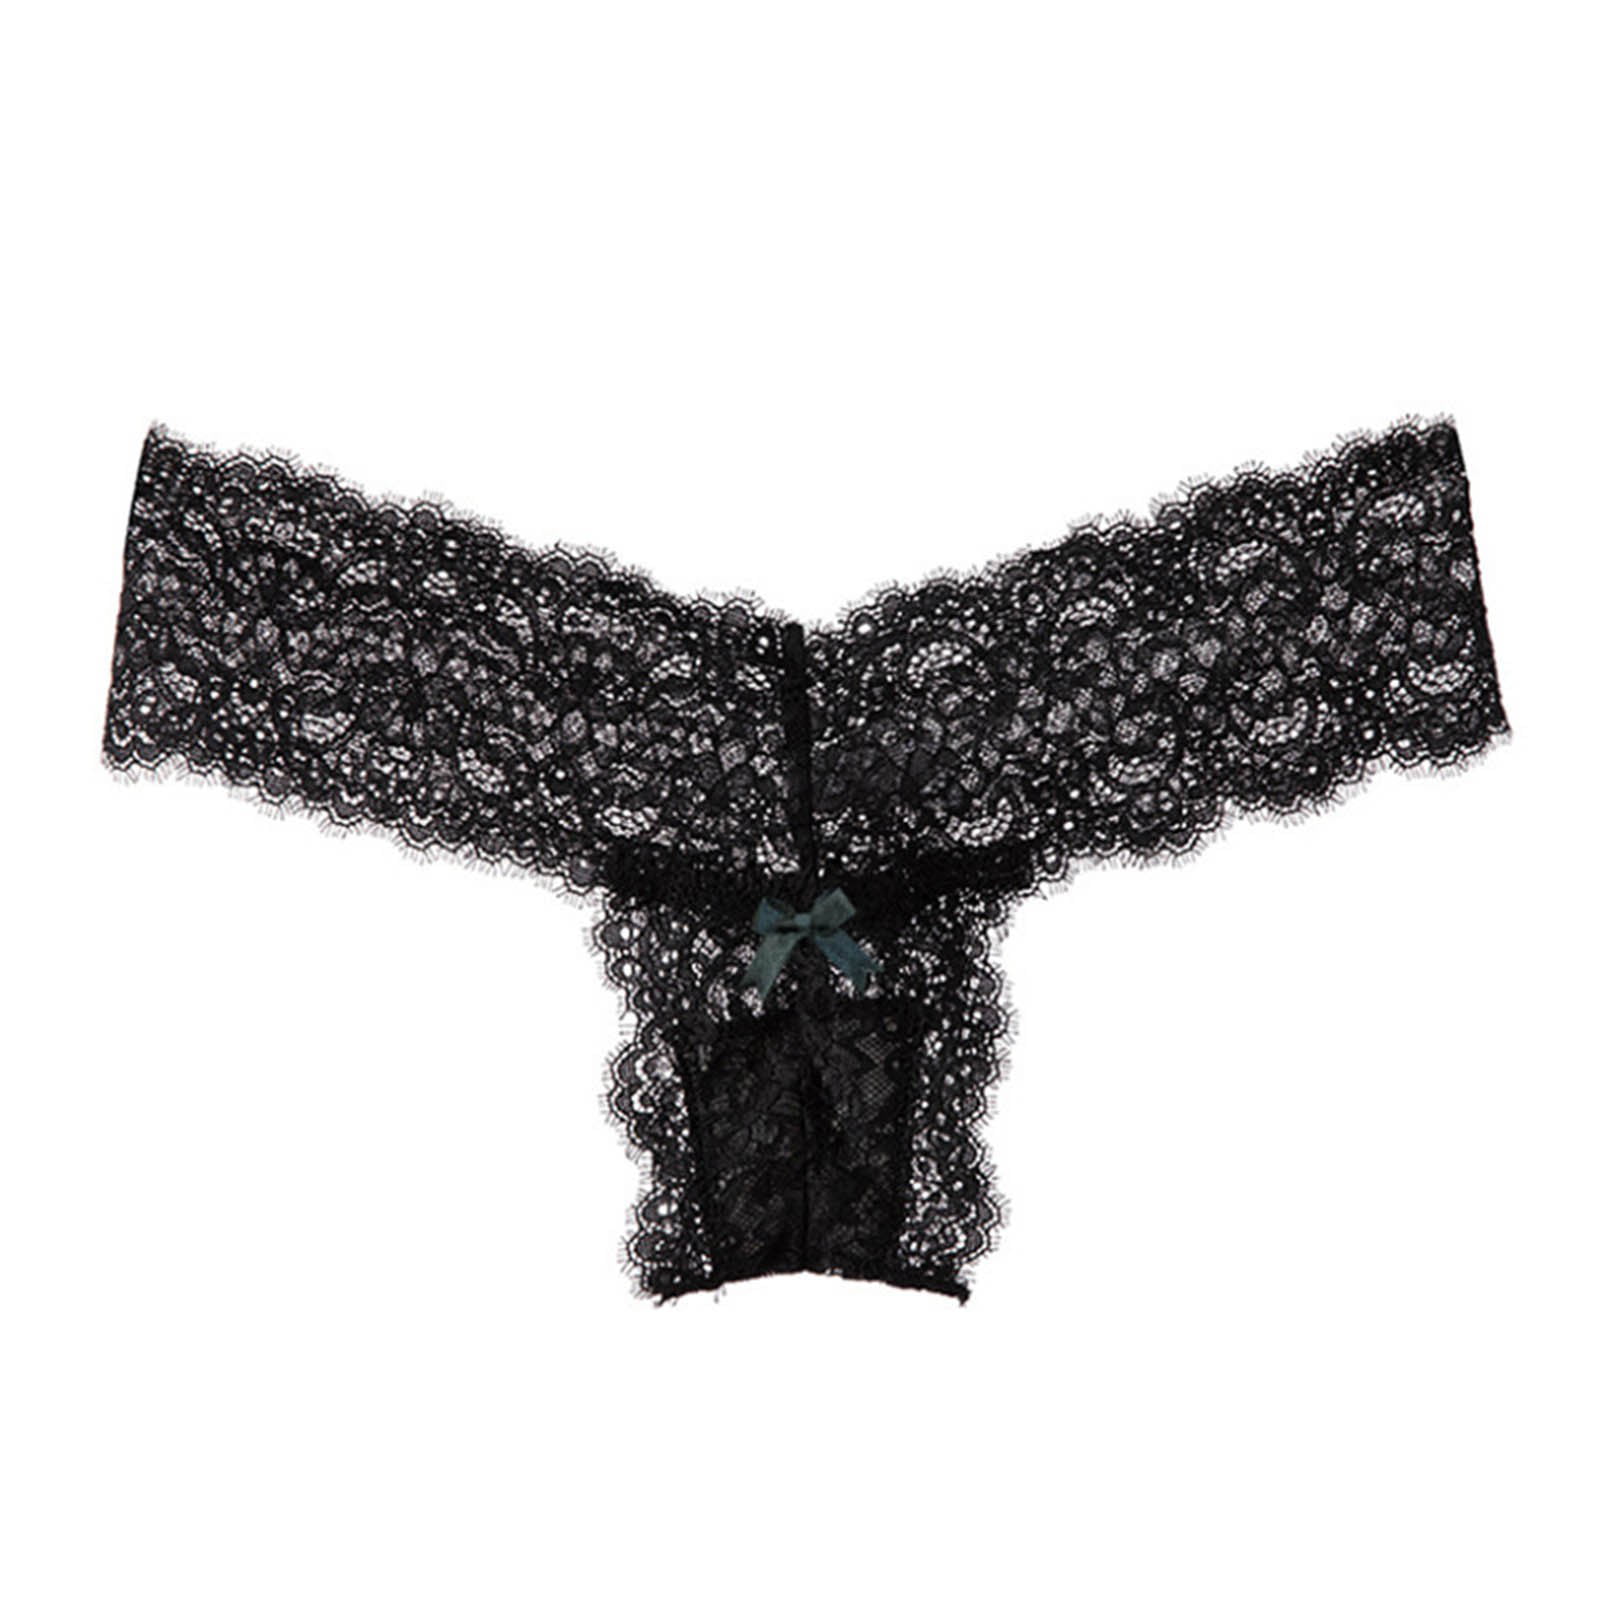 Pimfylm Cotton Thongs For Women Women's Flattering Lace Cotton Stretch  Panties Beige Medium 